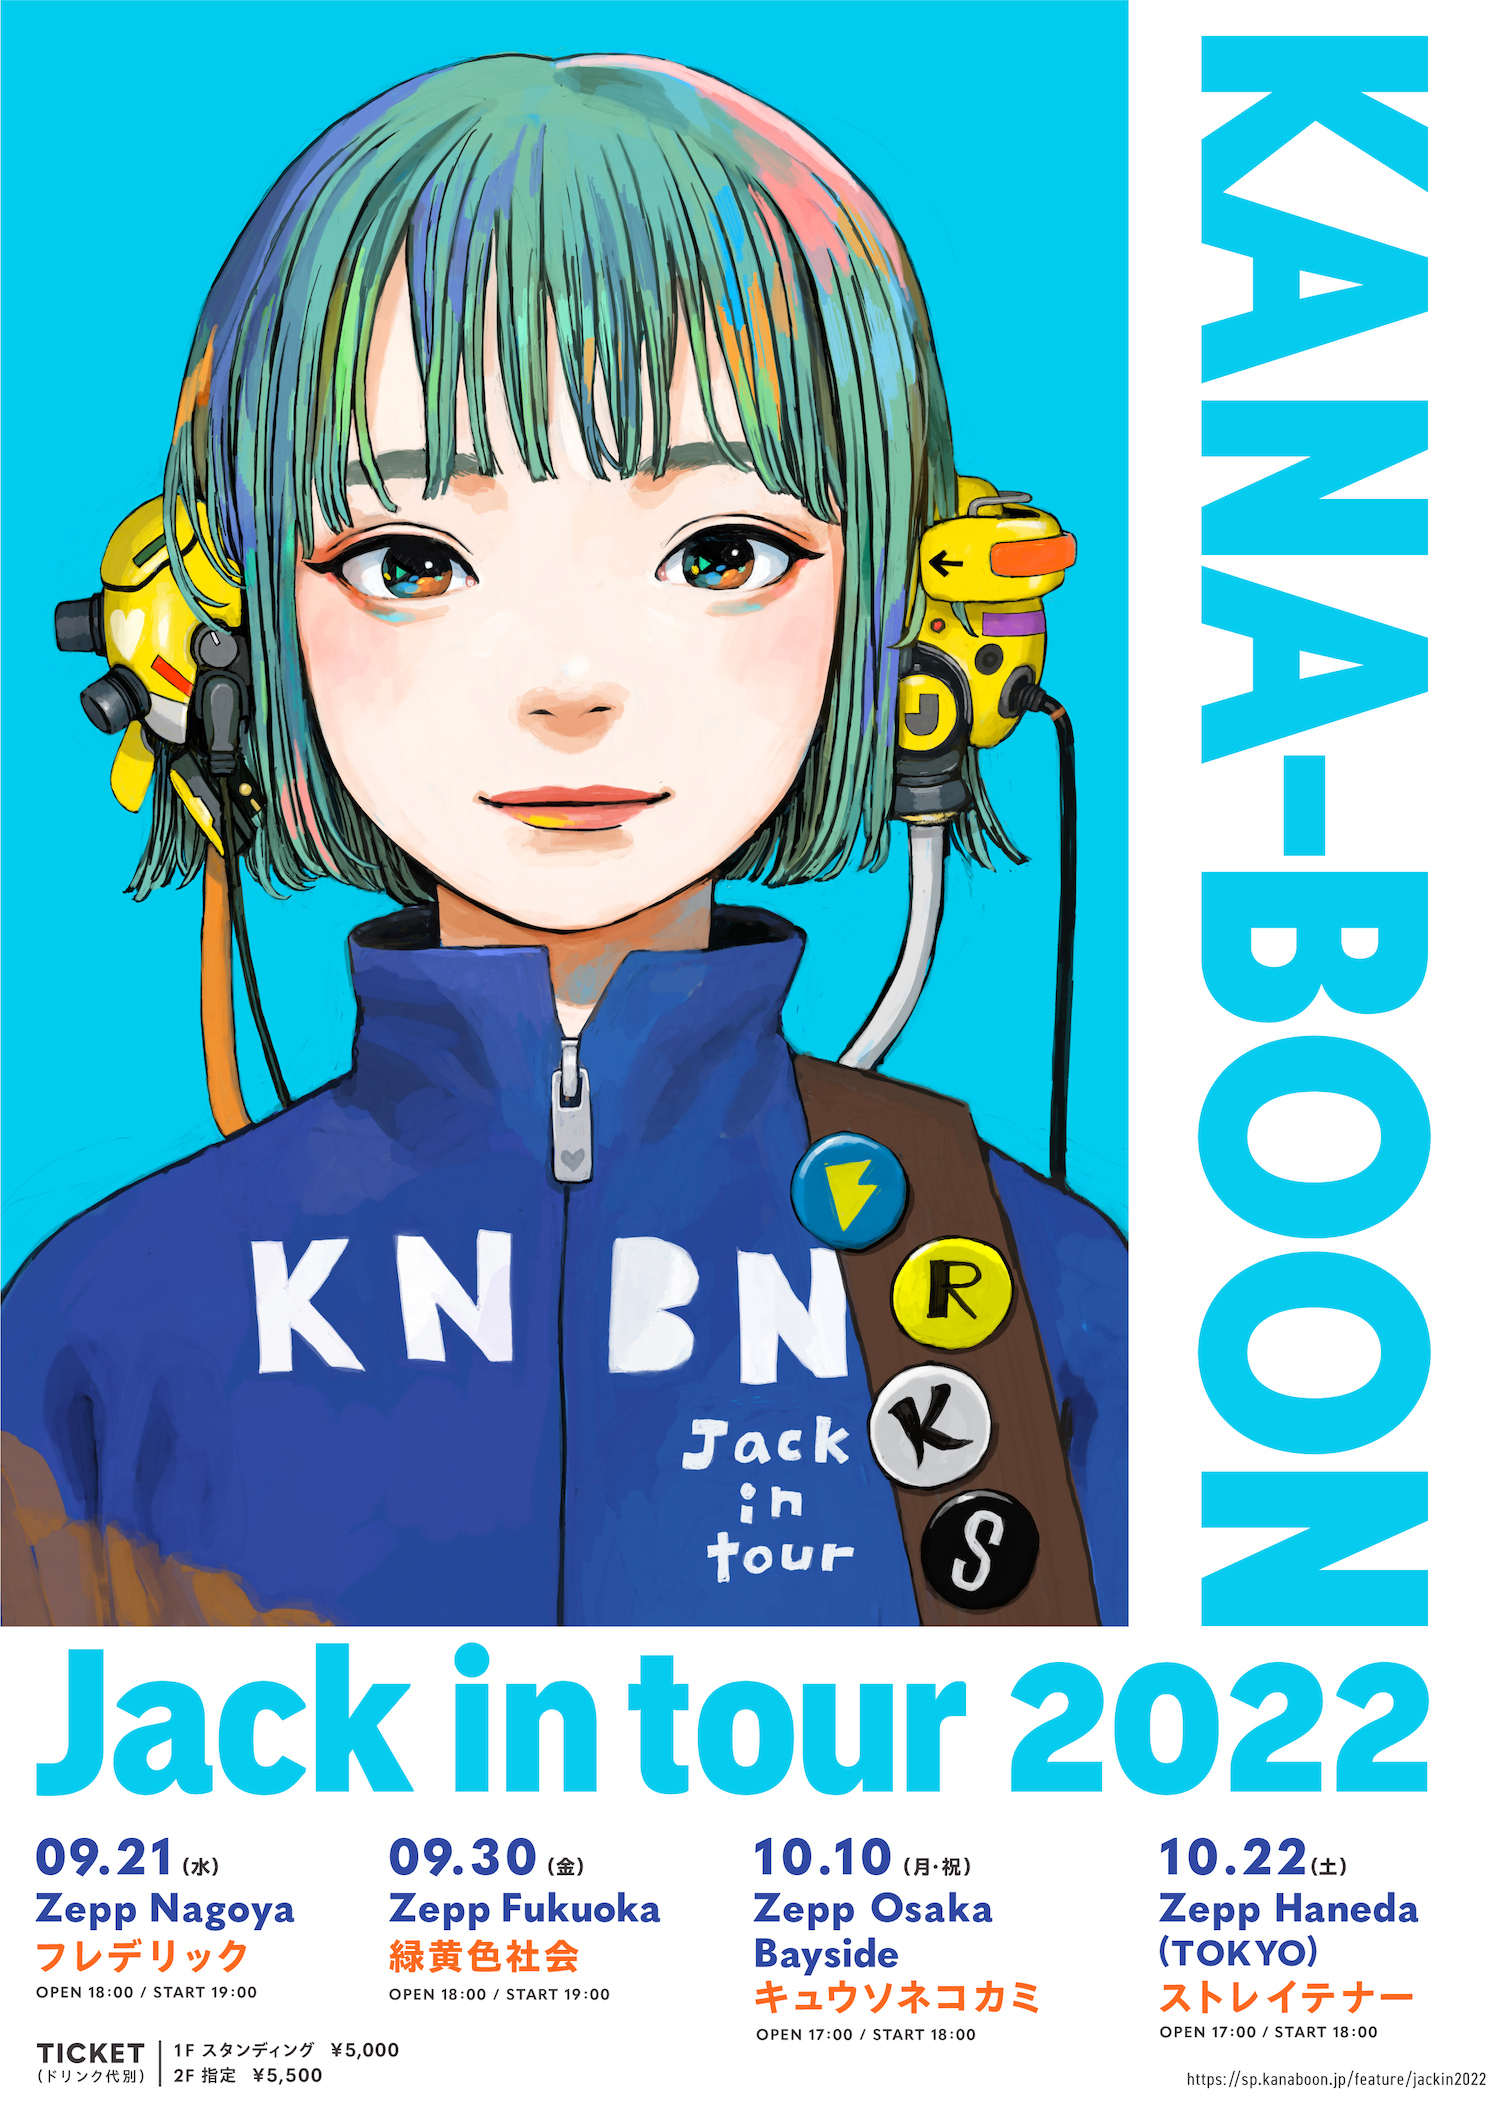 『KANA-BOON Jack in tour 2022』